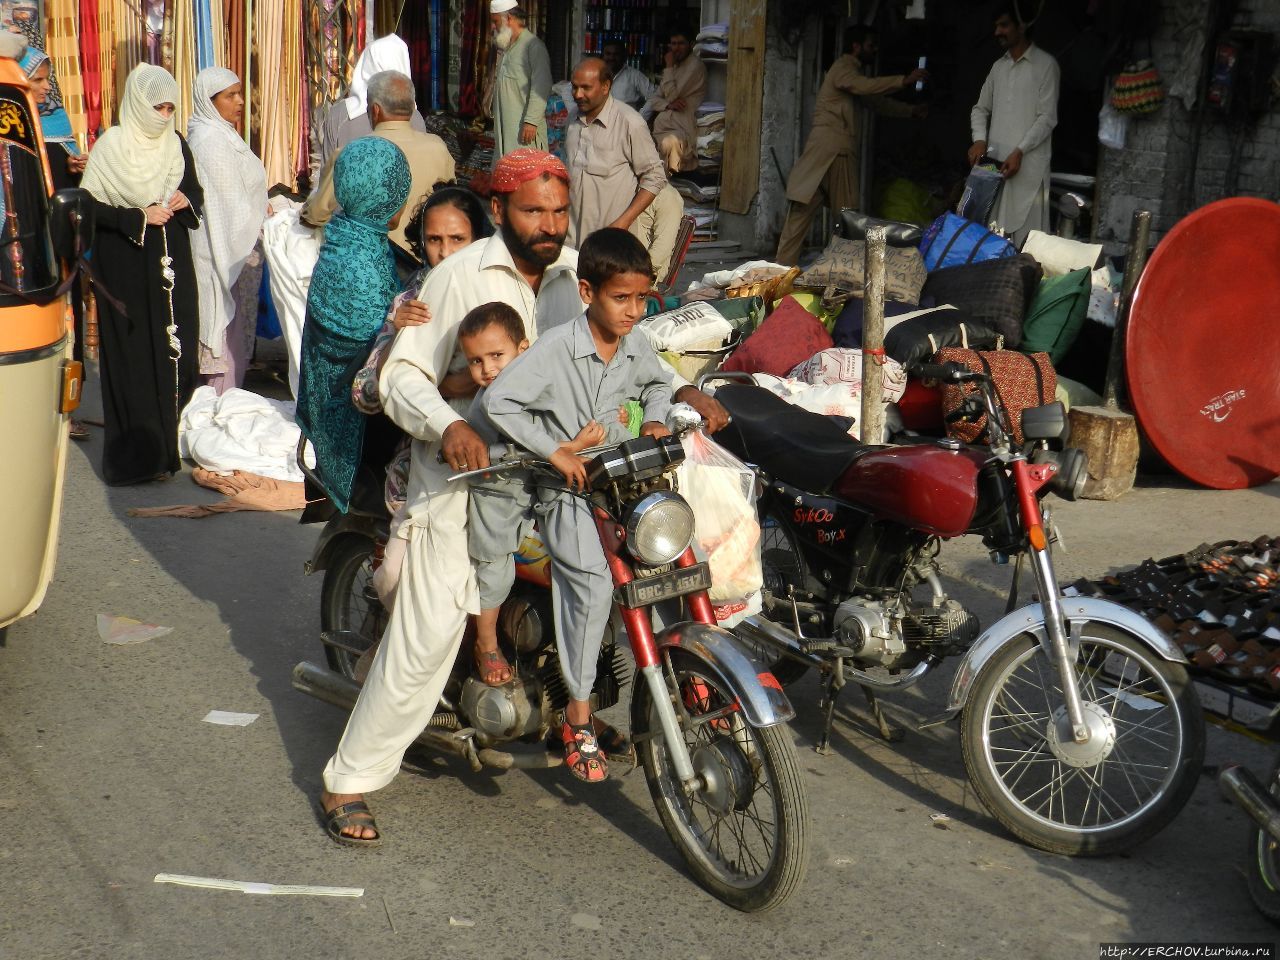 Пакистан. Ч — 15. Исламабад против Талибана. Равалпинди Равалпинди, Пакистан